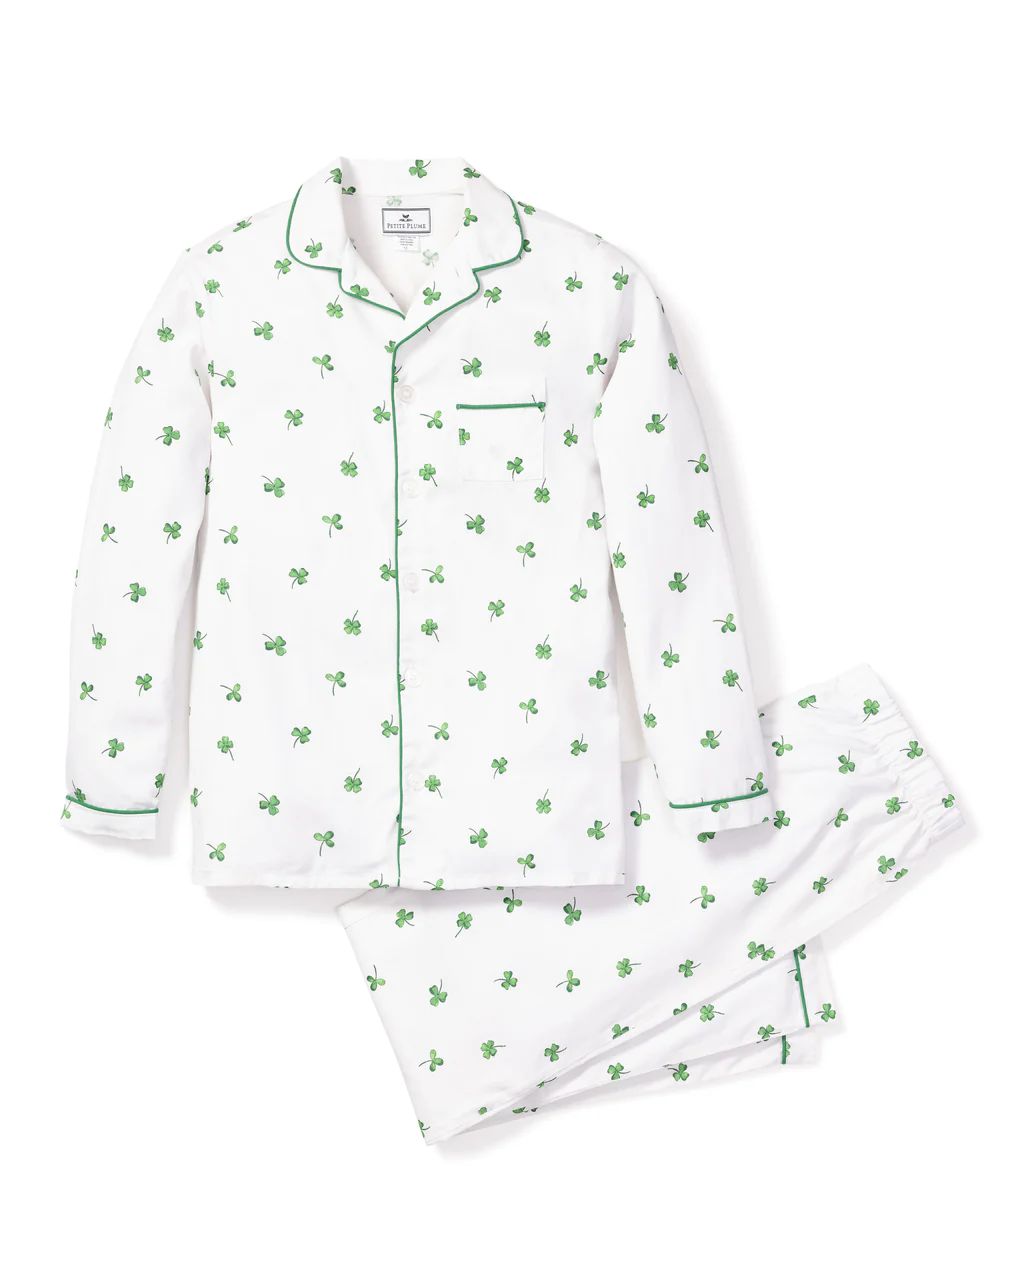 Kid's Twill Pajama Set in Shamrocks | Petite Plume